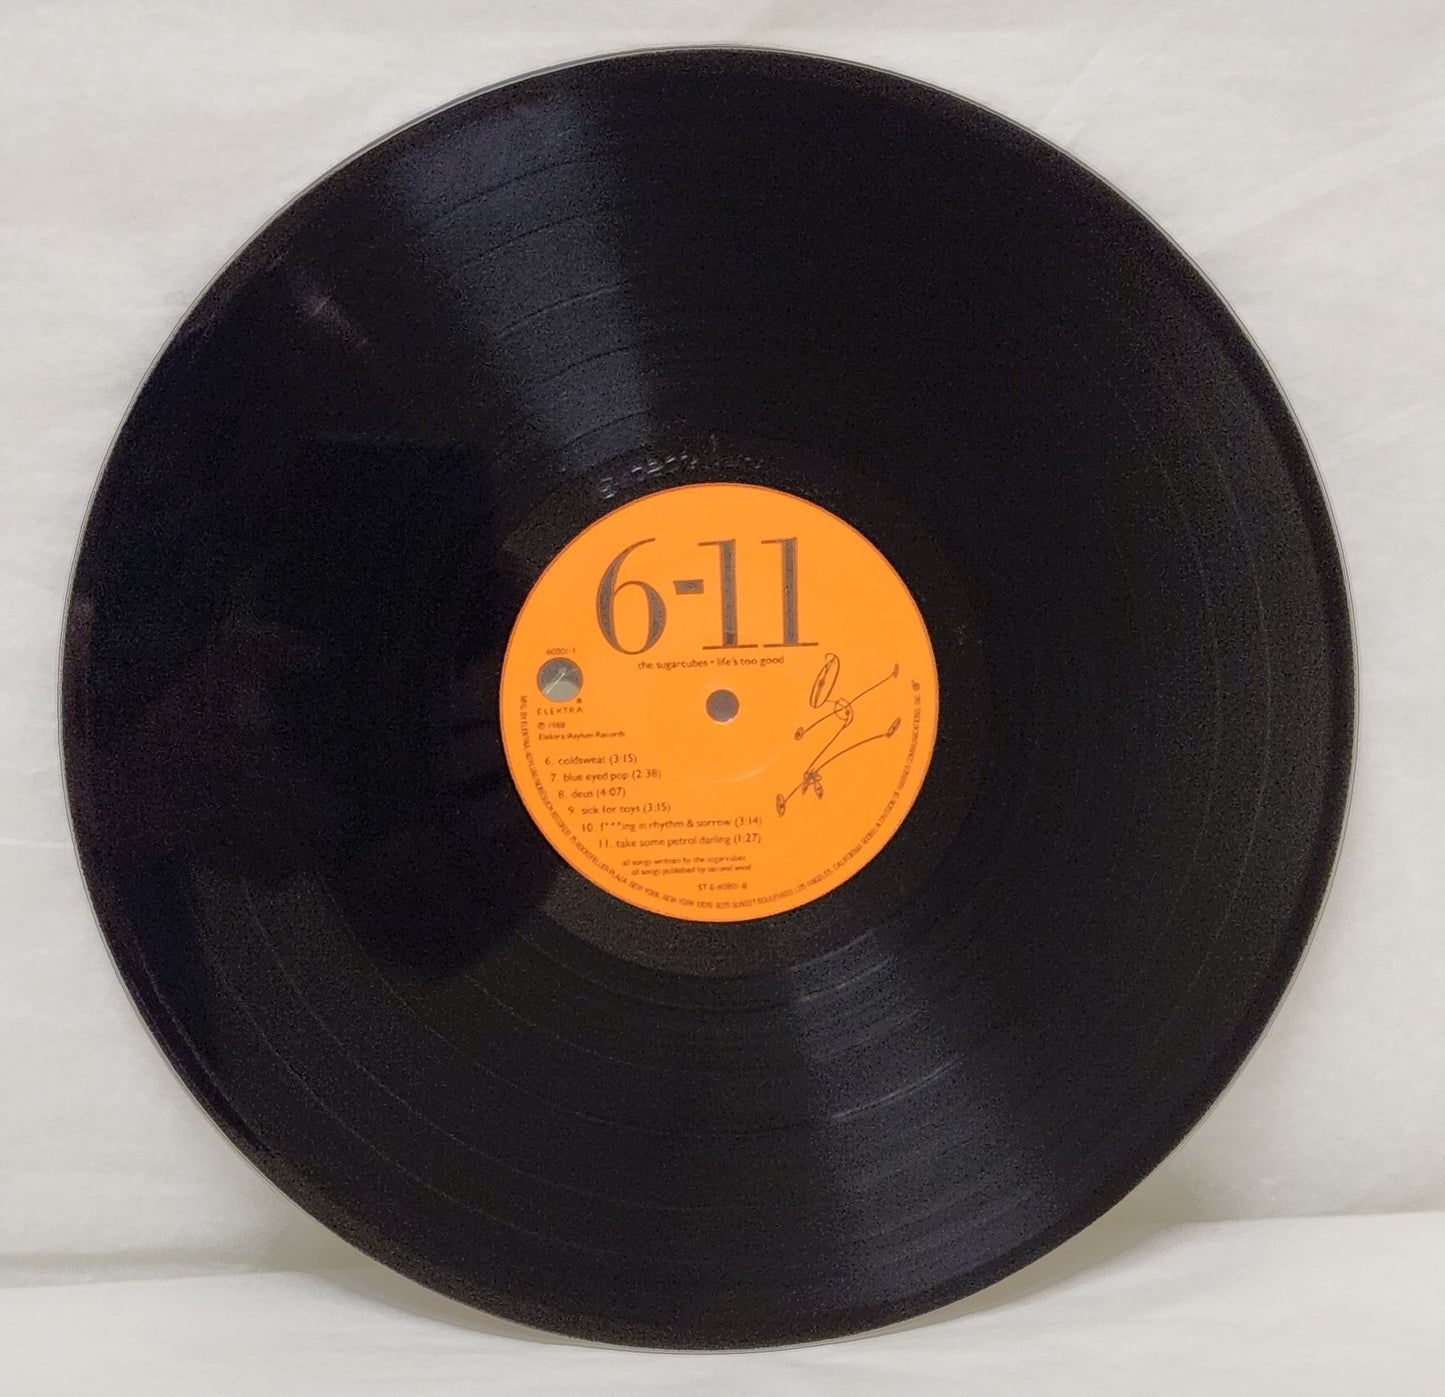 The Sugarcubes "Life's Too Good" 1988 Alt Rock / Pop Record Album